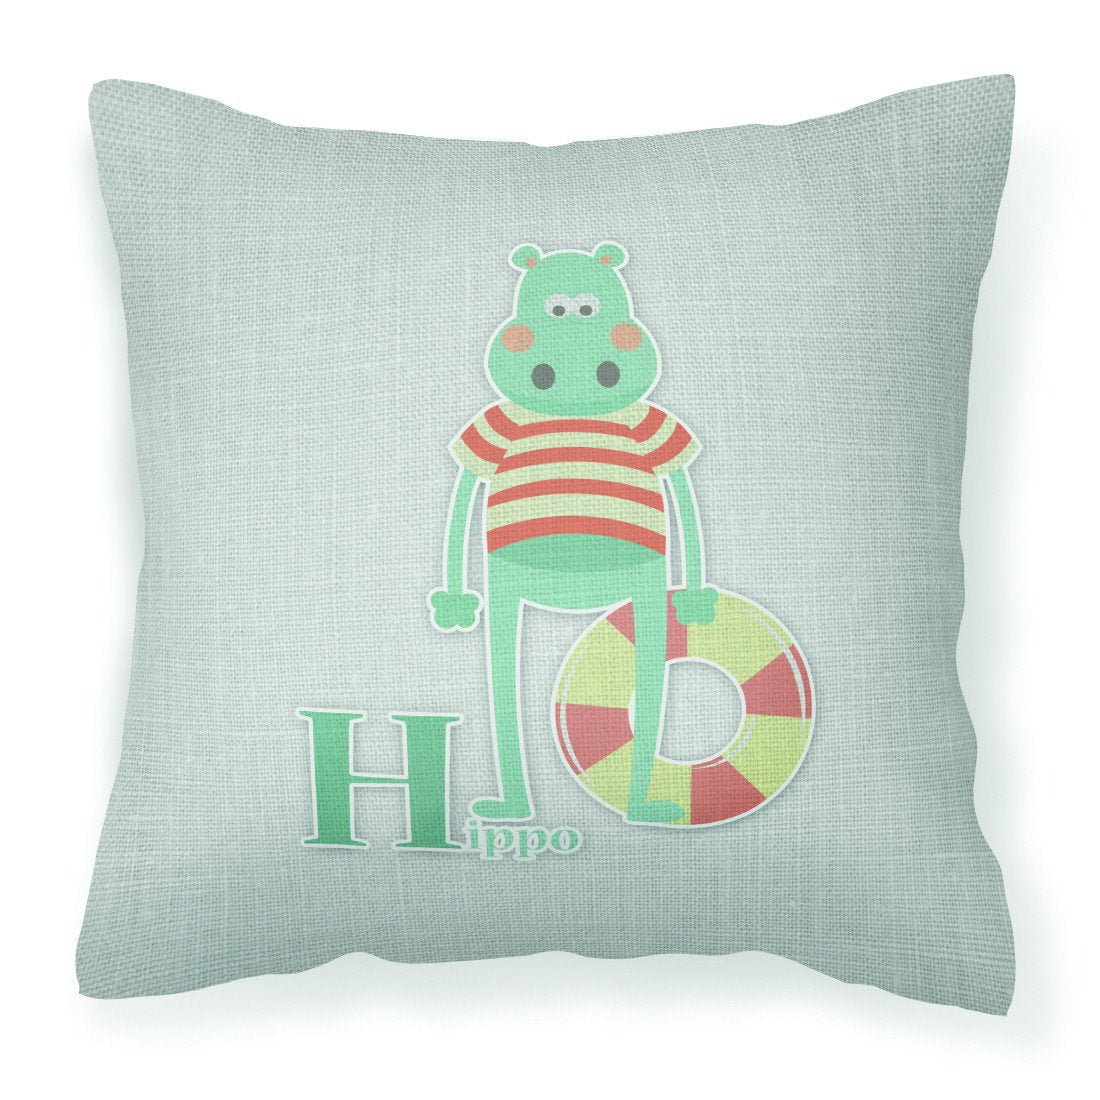 Alphabet H for Hippopotamus Fabric Decorative Pillow BB5733PW1818 by Caroline's Treasures